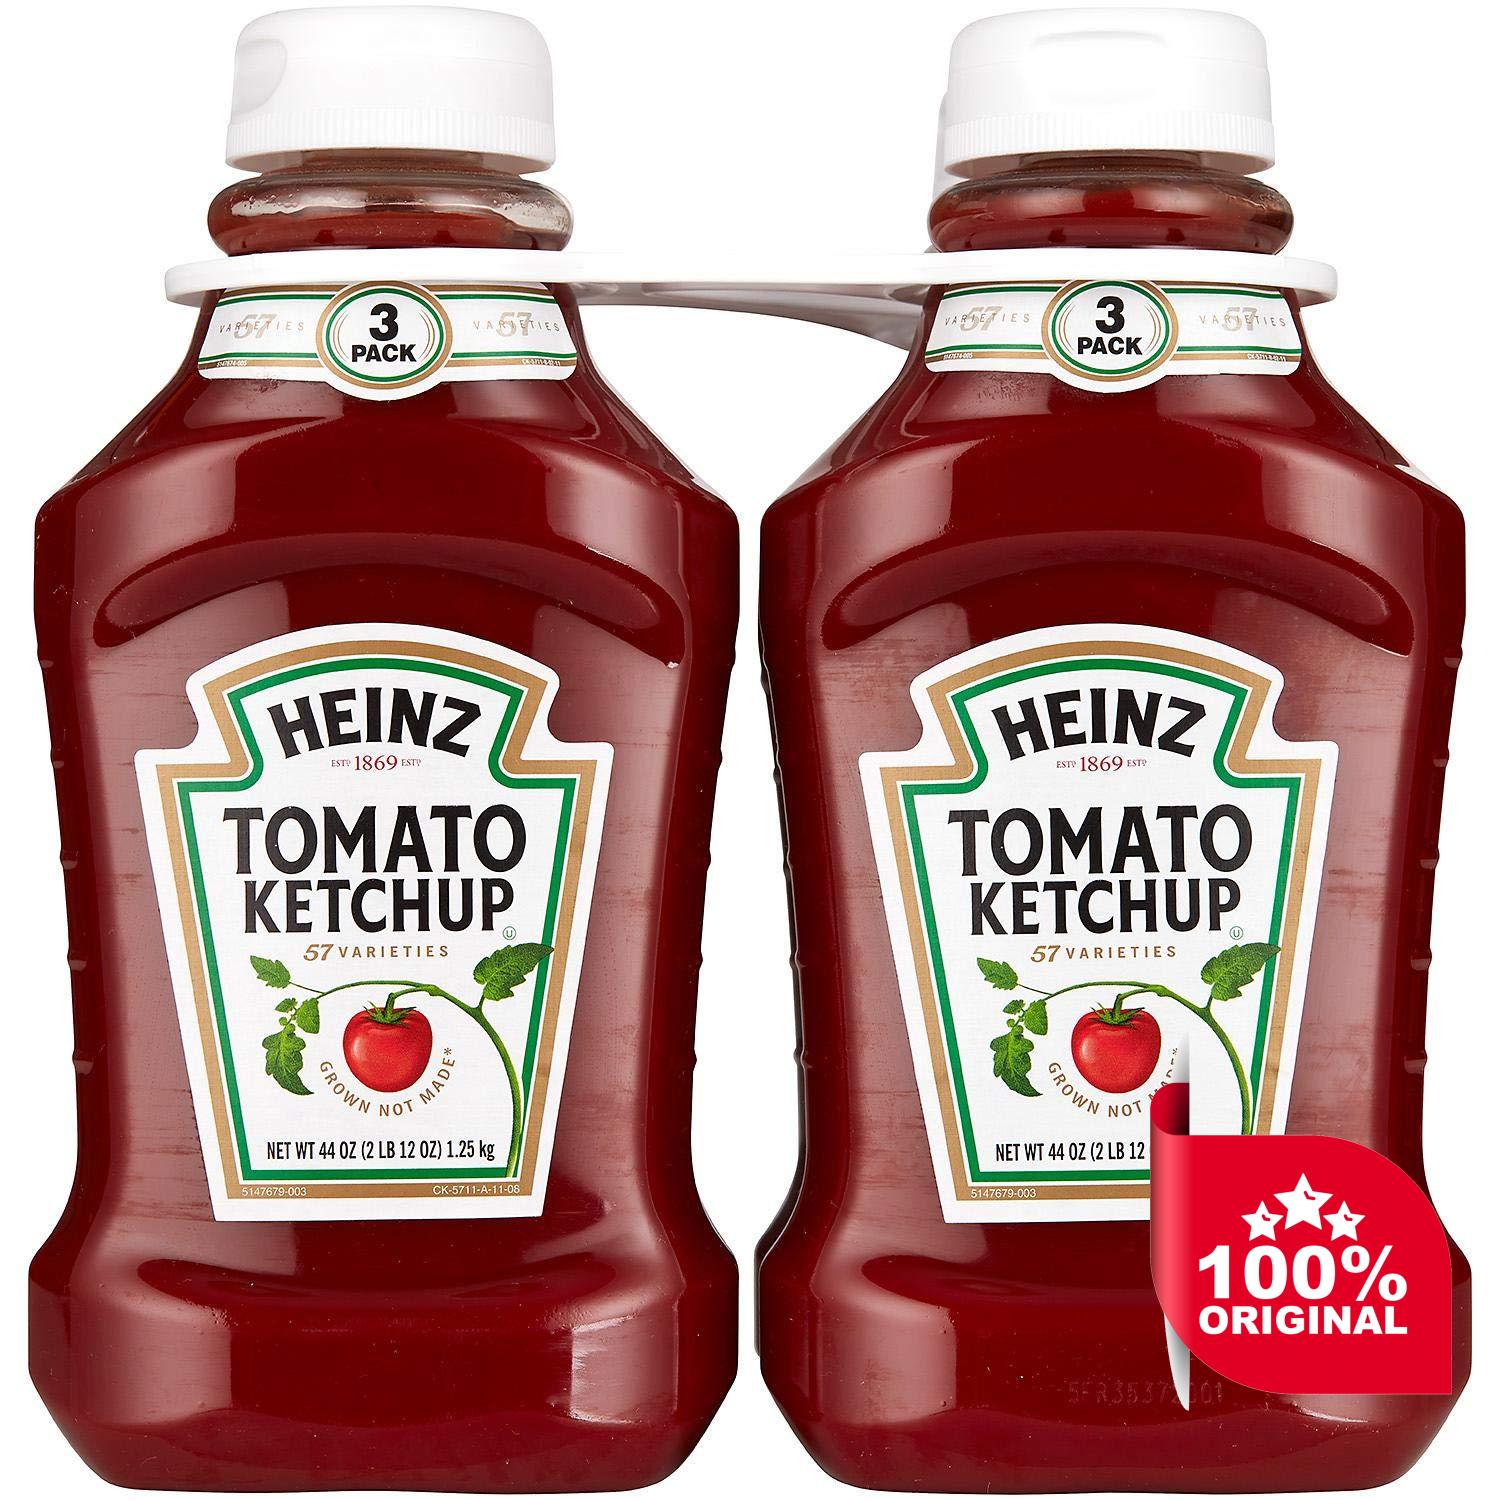 Печенье кетчуп. "Ketchup ""Heinz"" Tomato 570g  ". Ketchup Mayo Heinz. Heinz 1706 томат Хайнц. Mayonnaise Heinz Heinz.